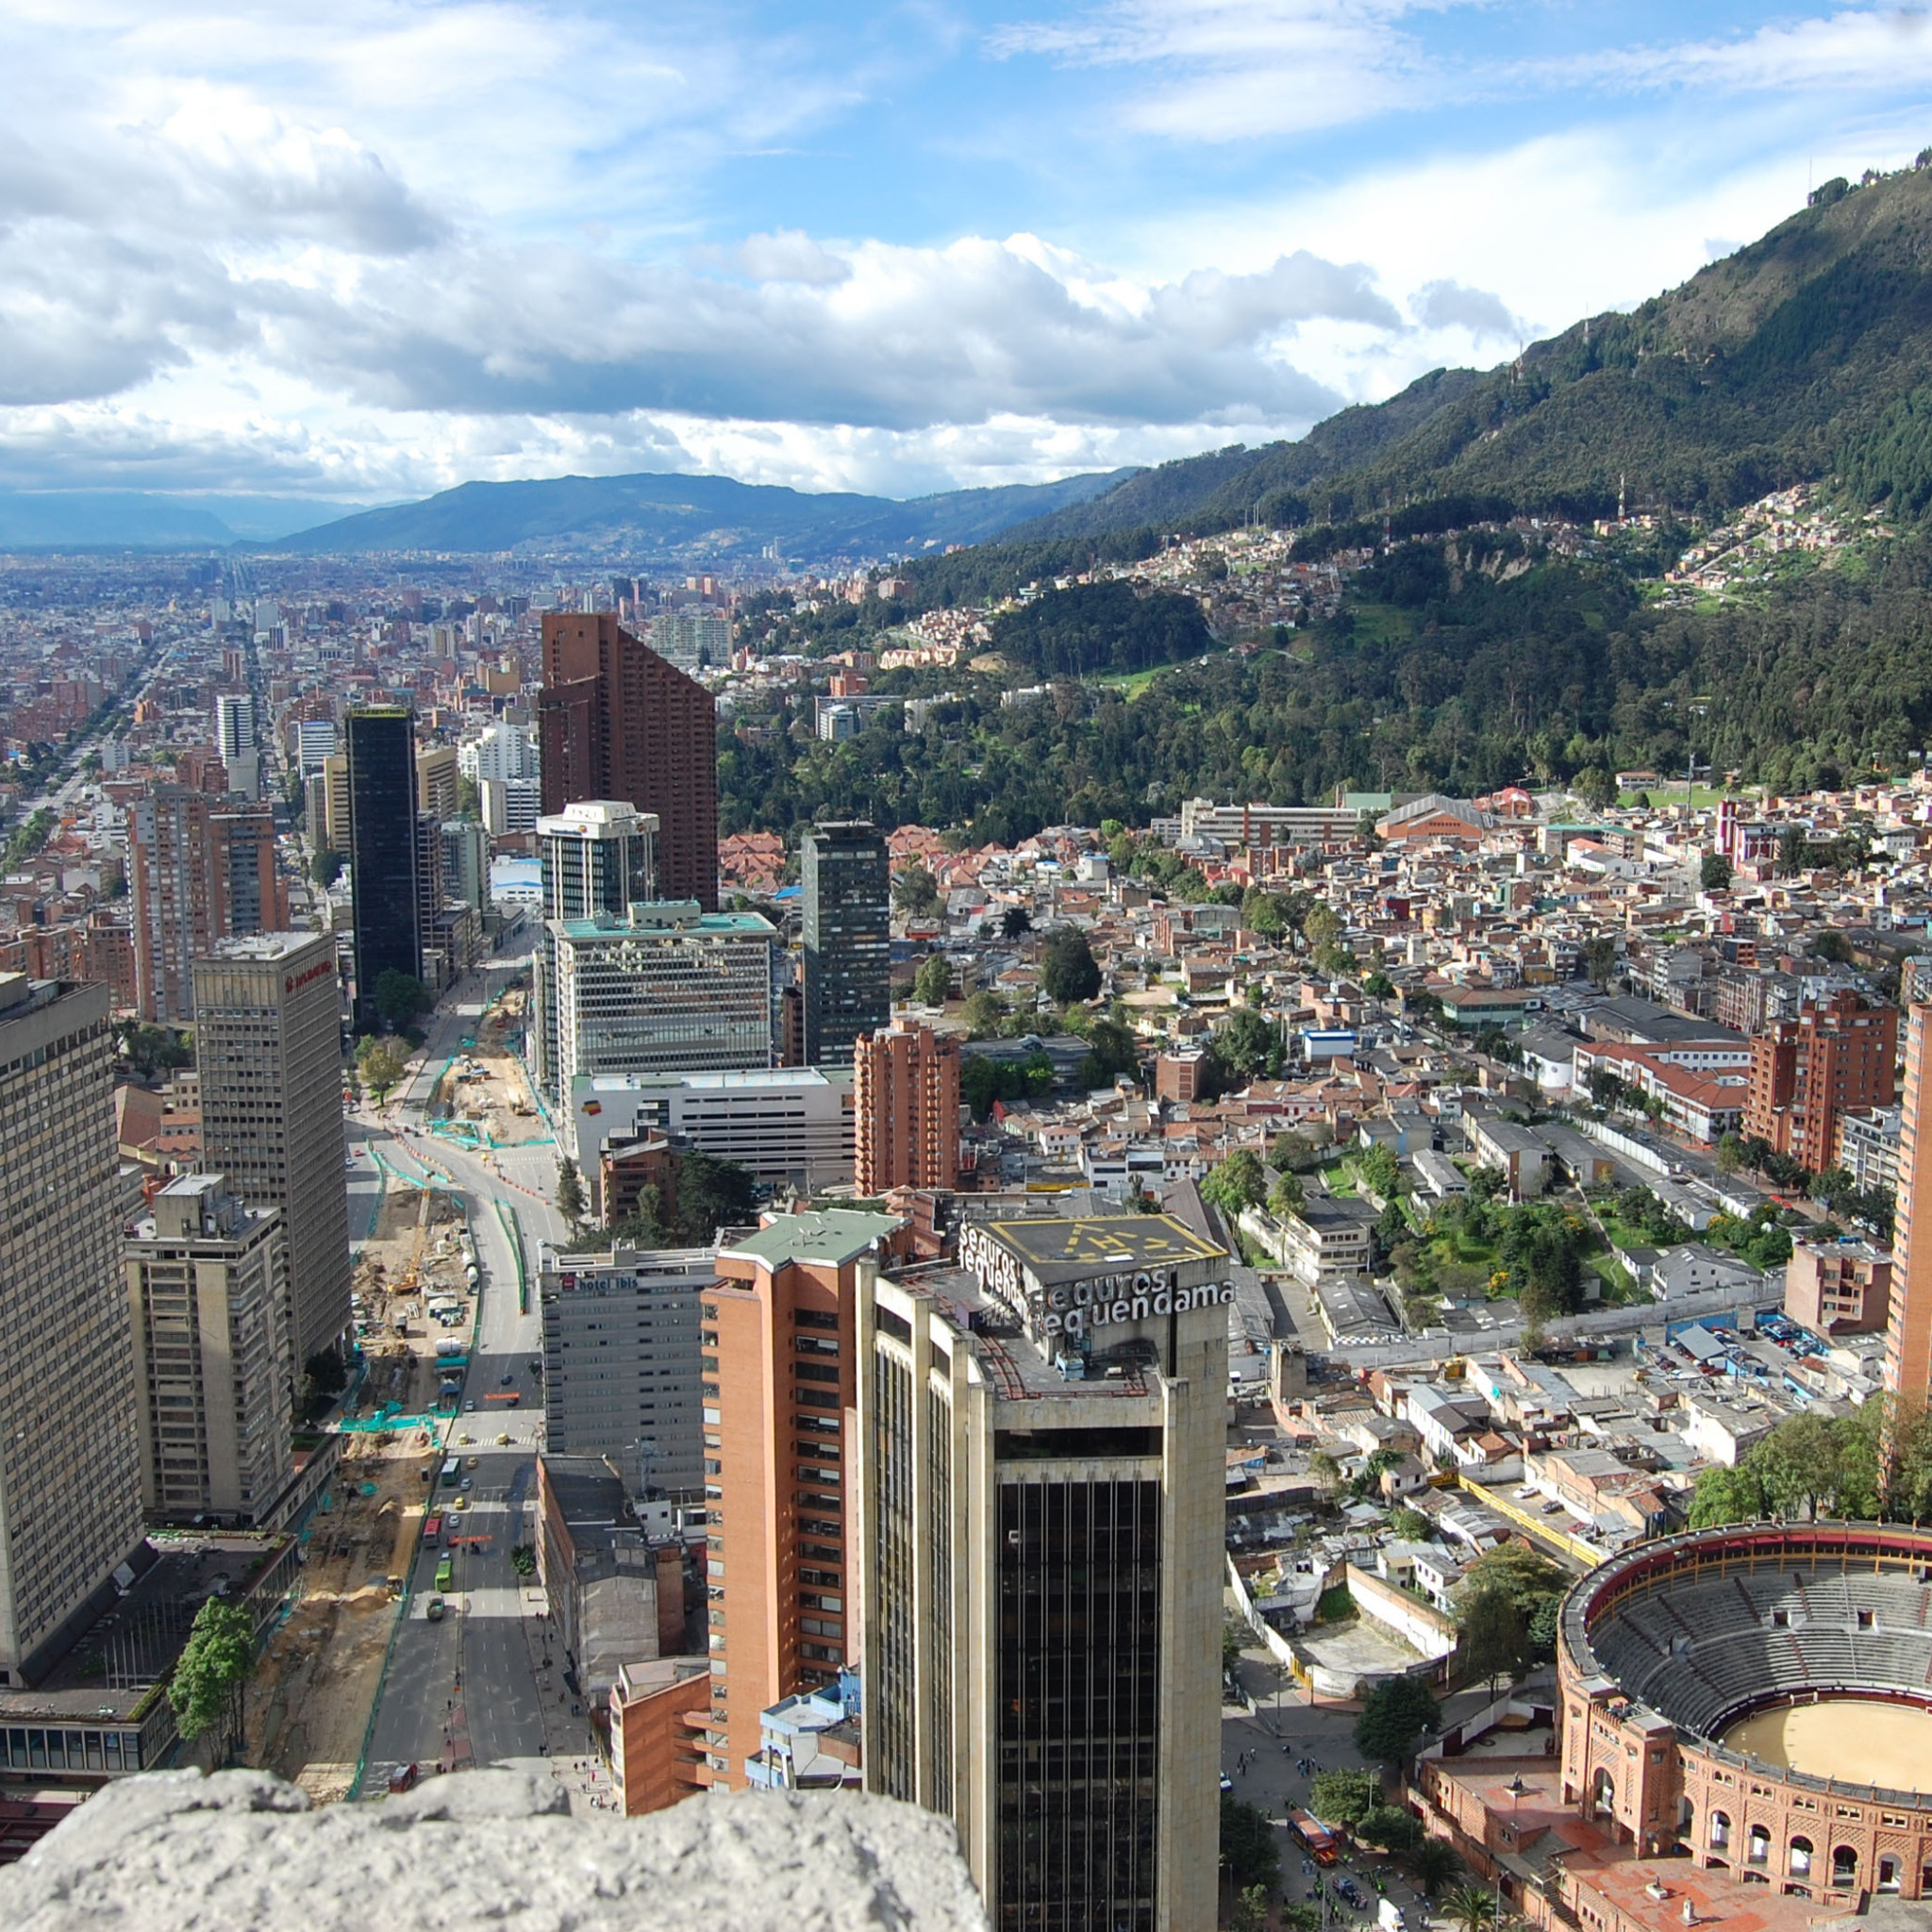 Санта Фе де Богота. Богота столица. Республика Колумбия Богота. Республика Колумбия столица Богота. Крупные города колумбии